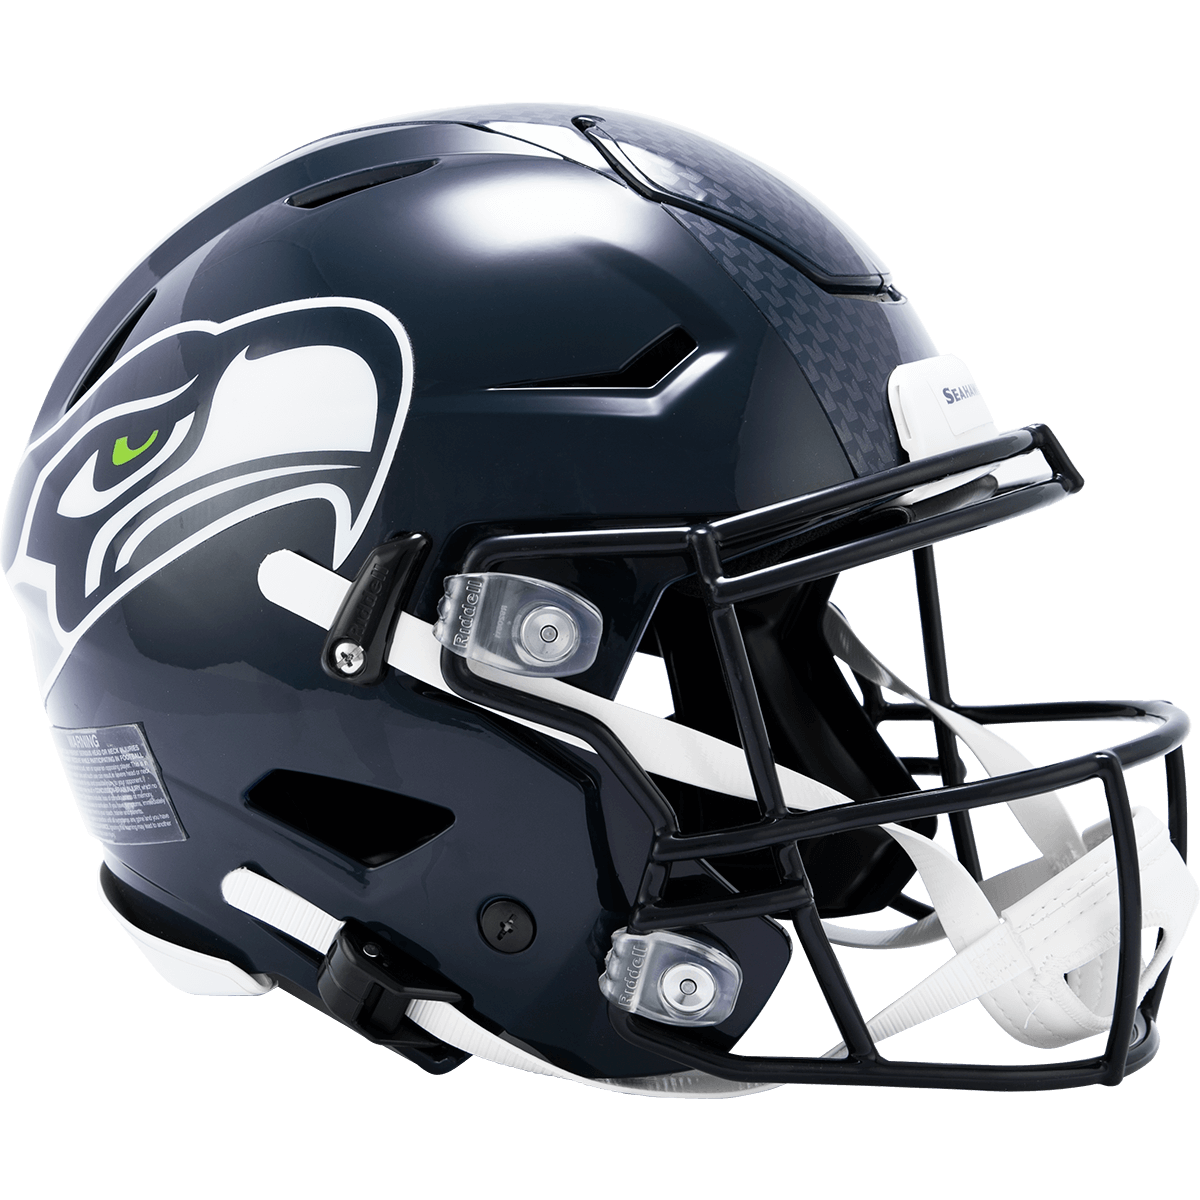 Seattle Seahawks Helmet | Logos & Lists